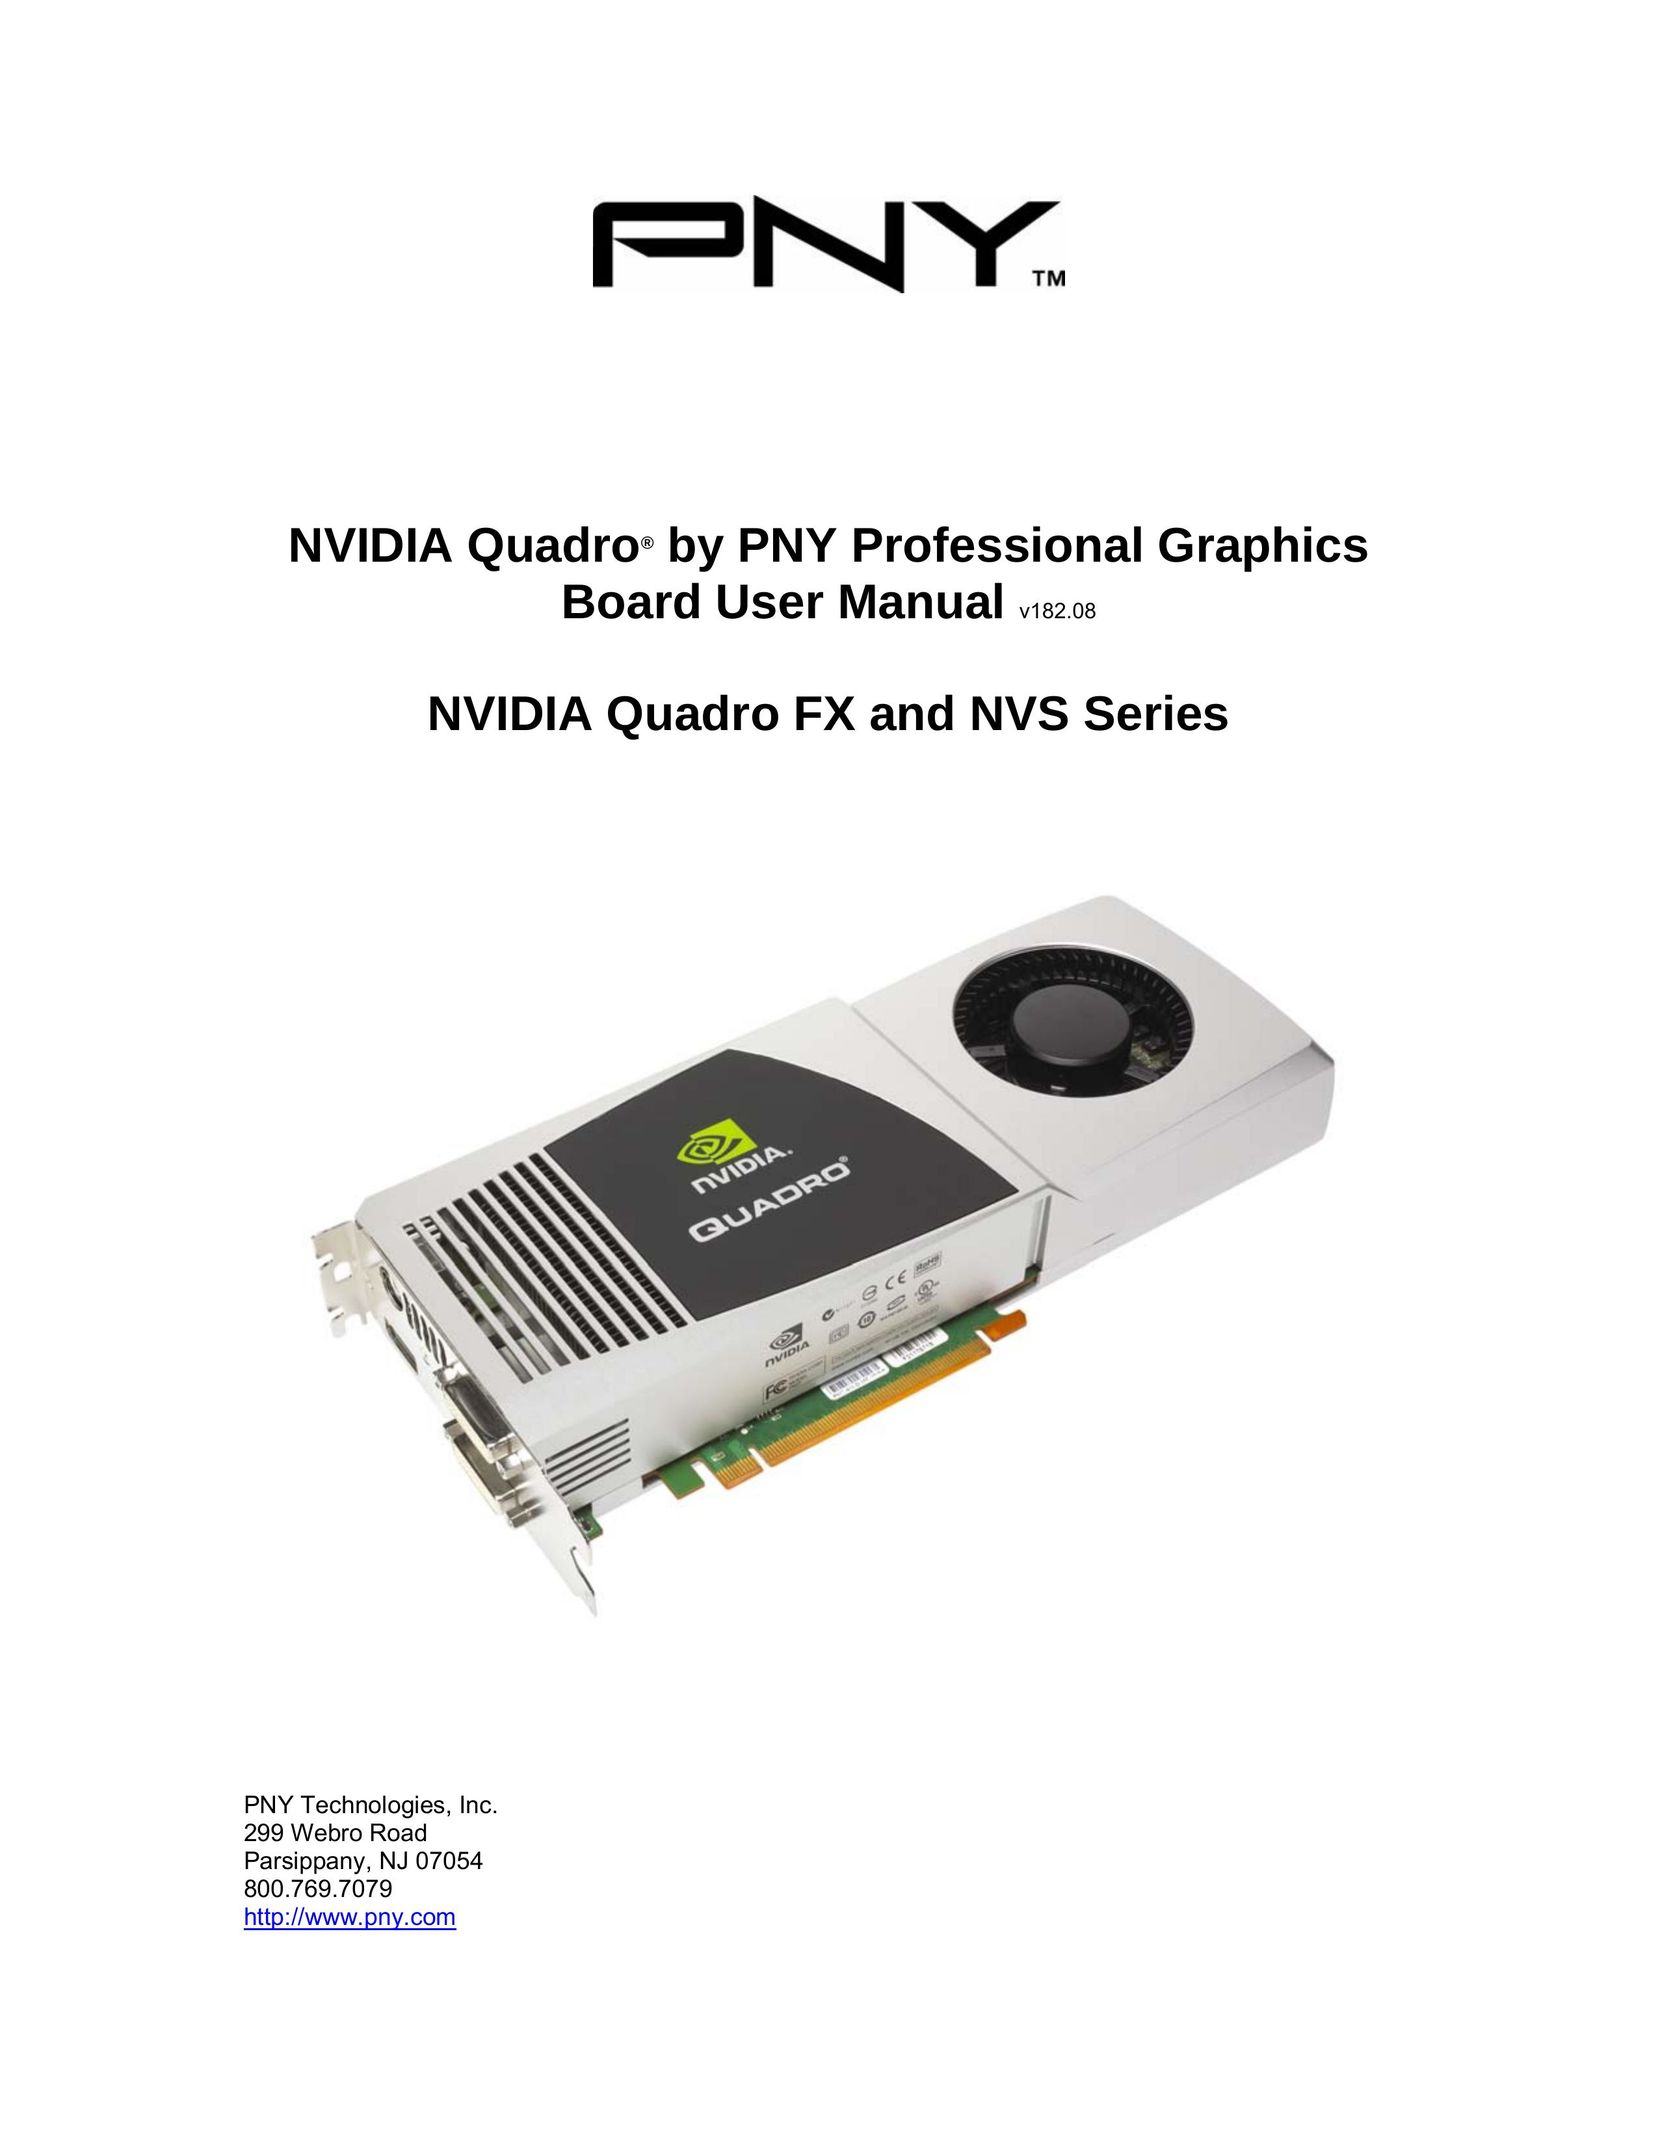 PNY FX 4600 SDI Computer Hardware User Manual